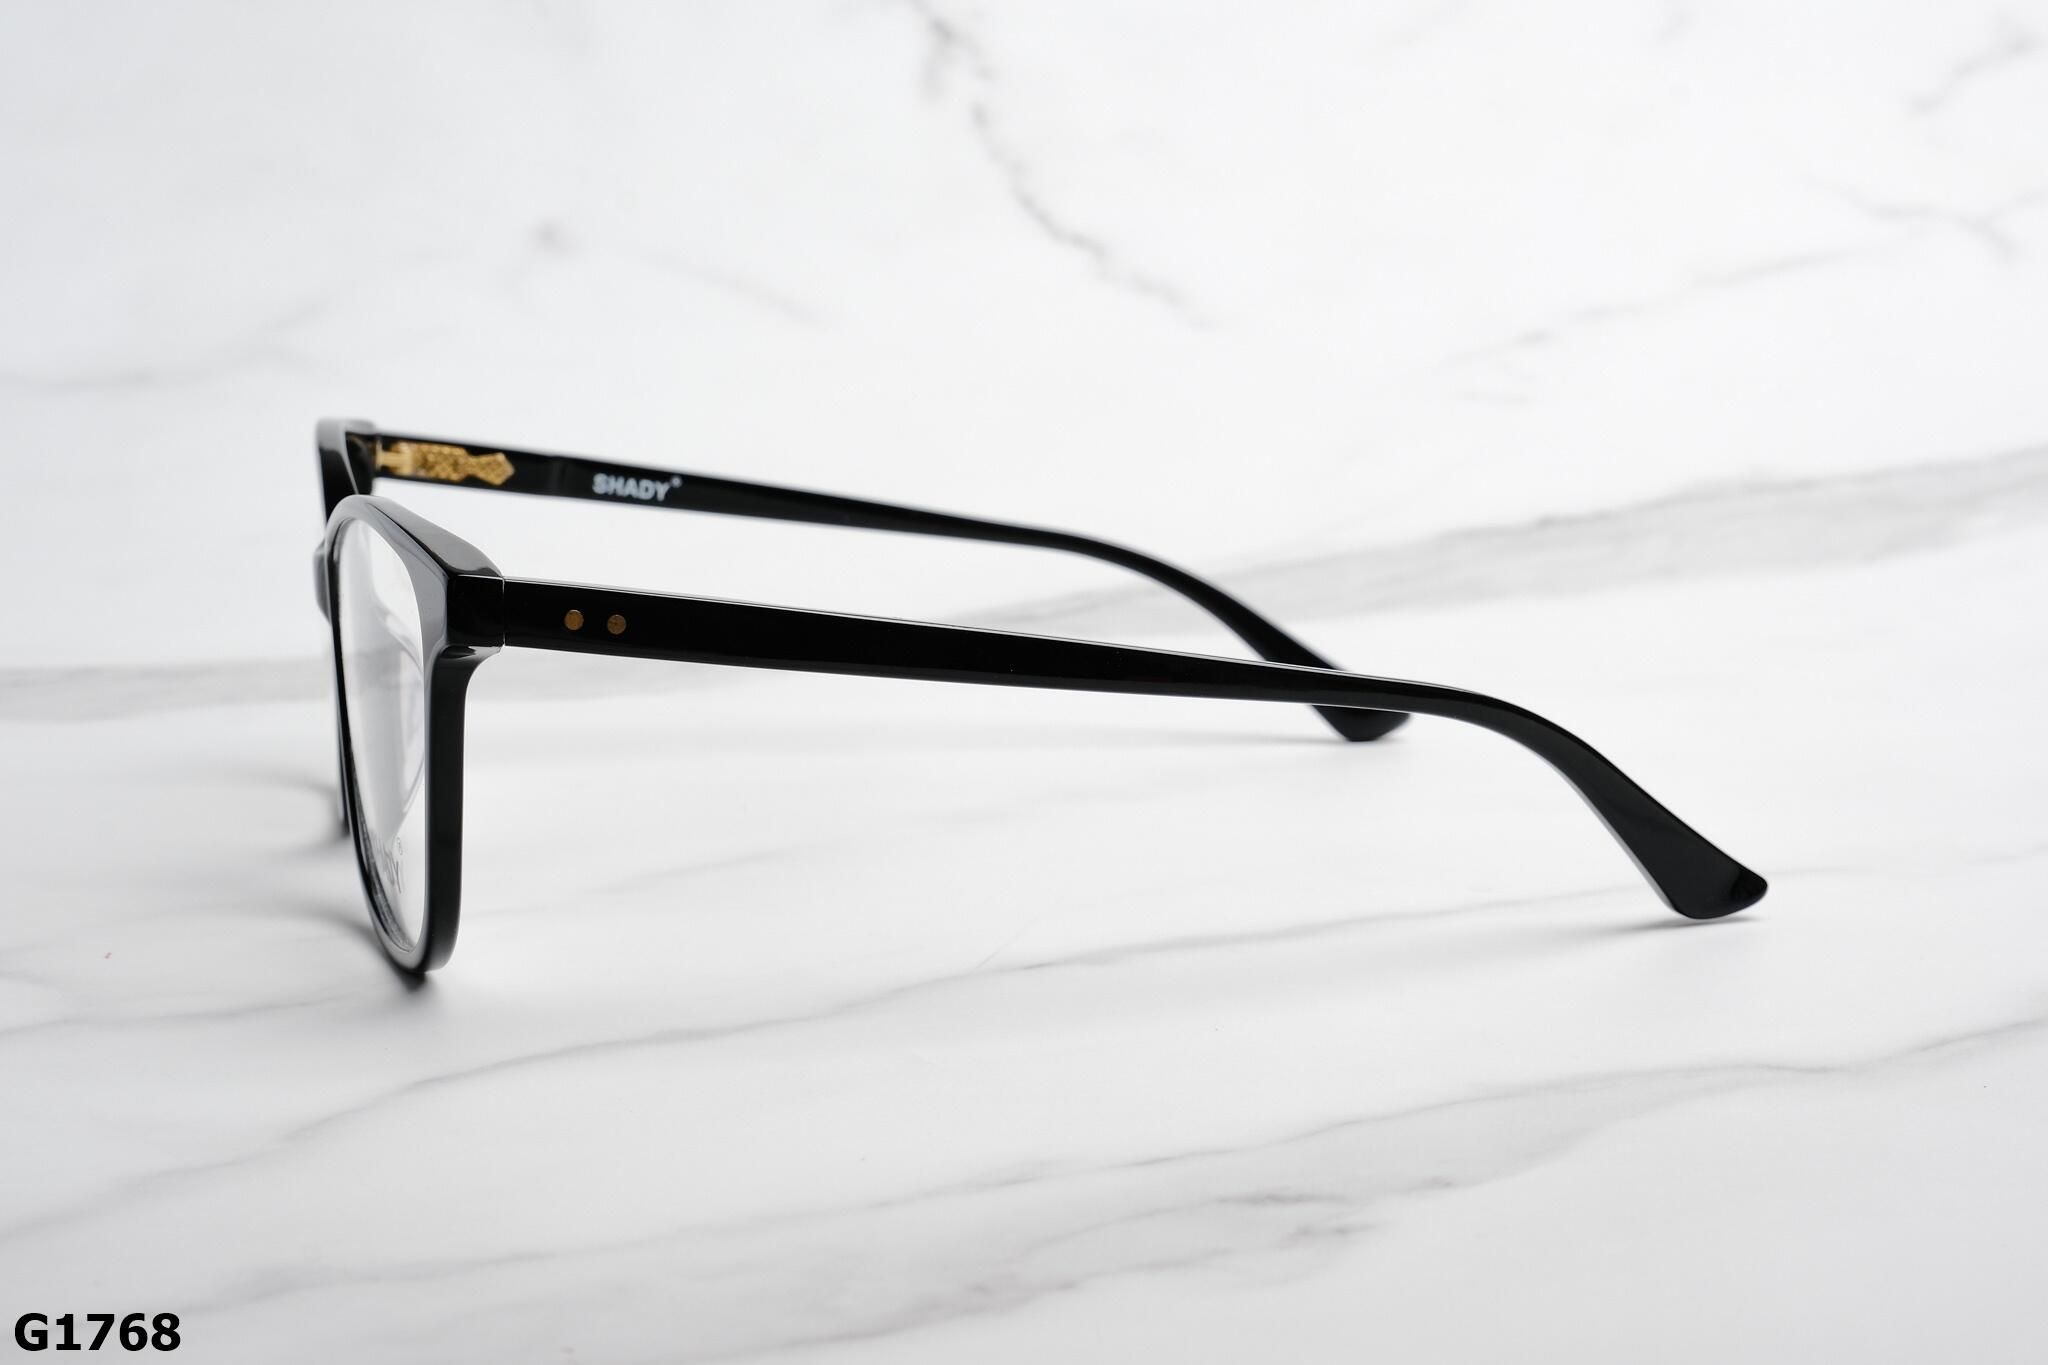  SHADY Eyewear - Glasses - G1768 